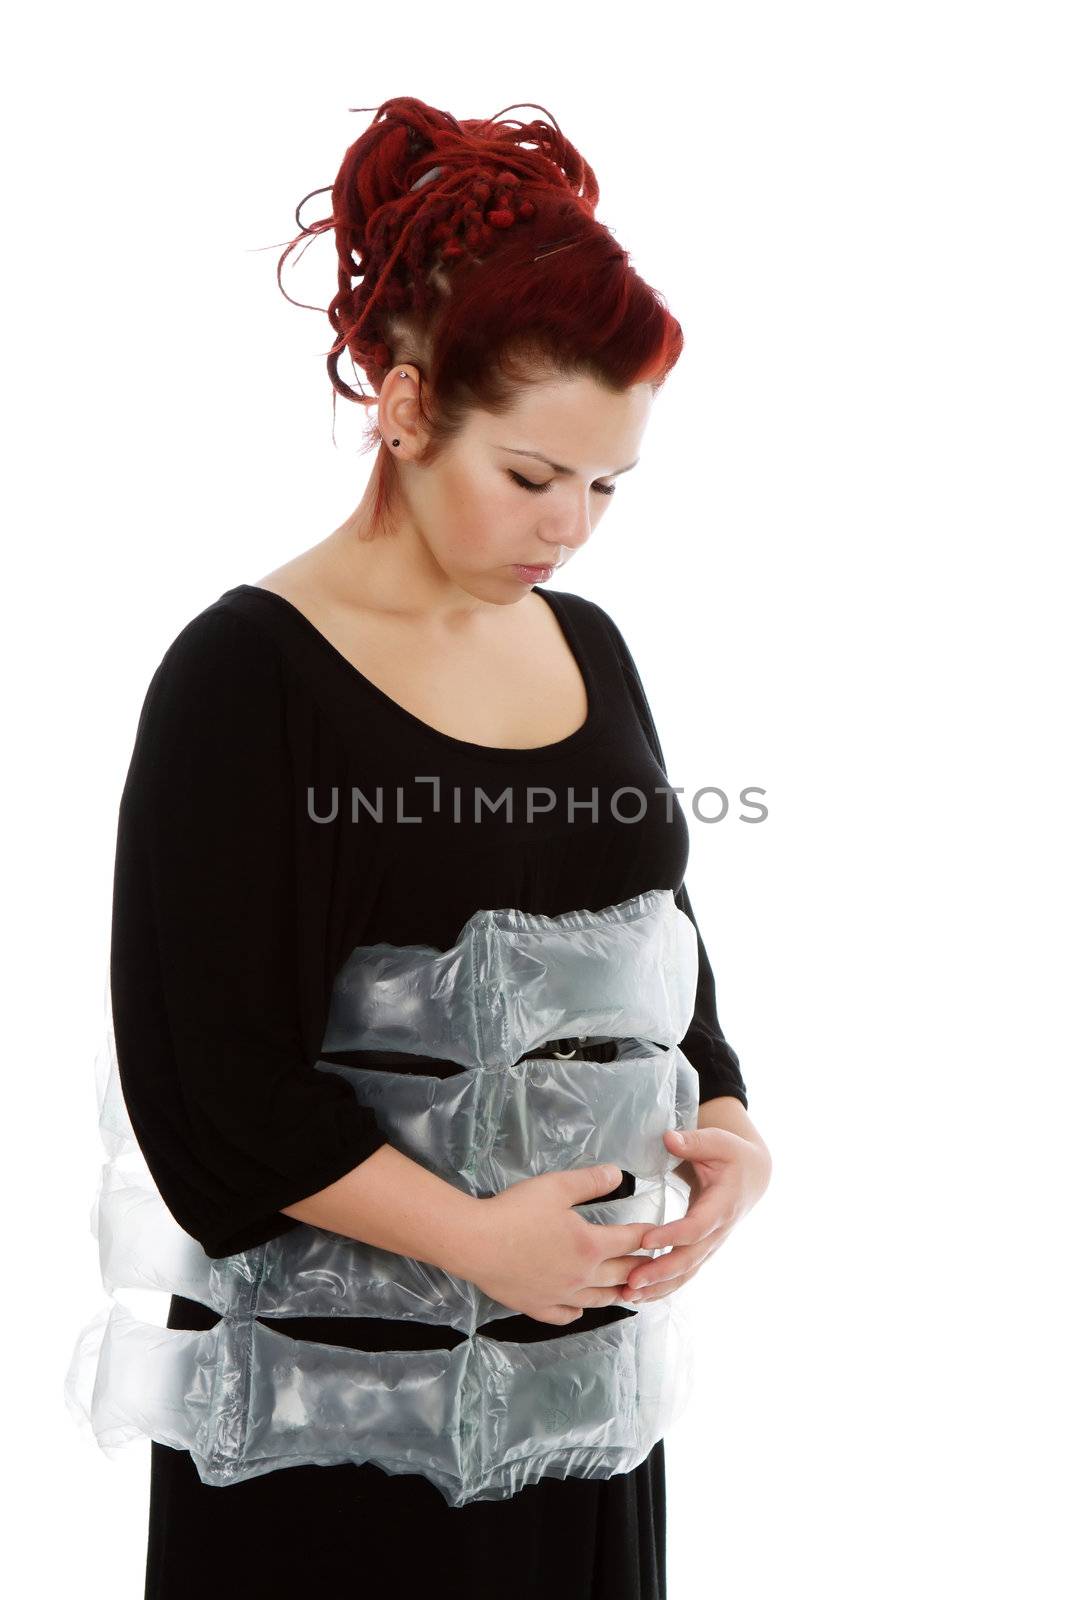 Imaginary pregnancy  by fotorobs